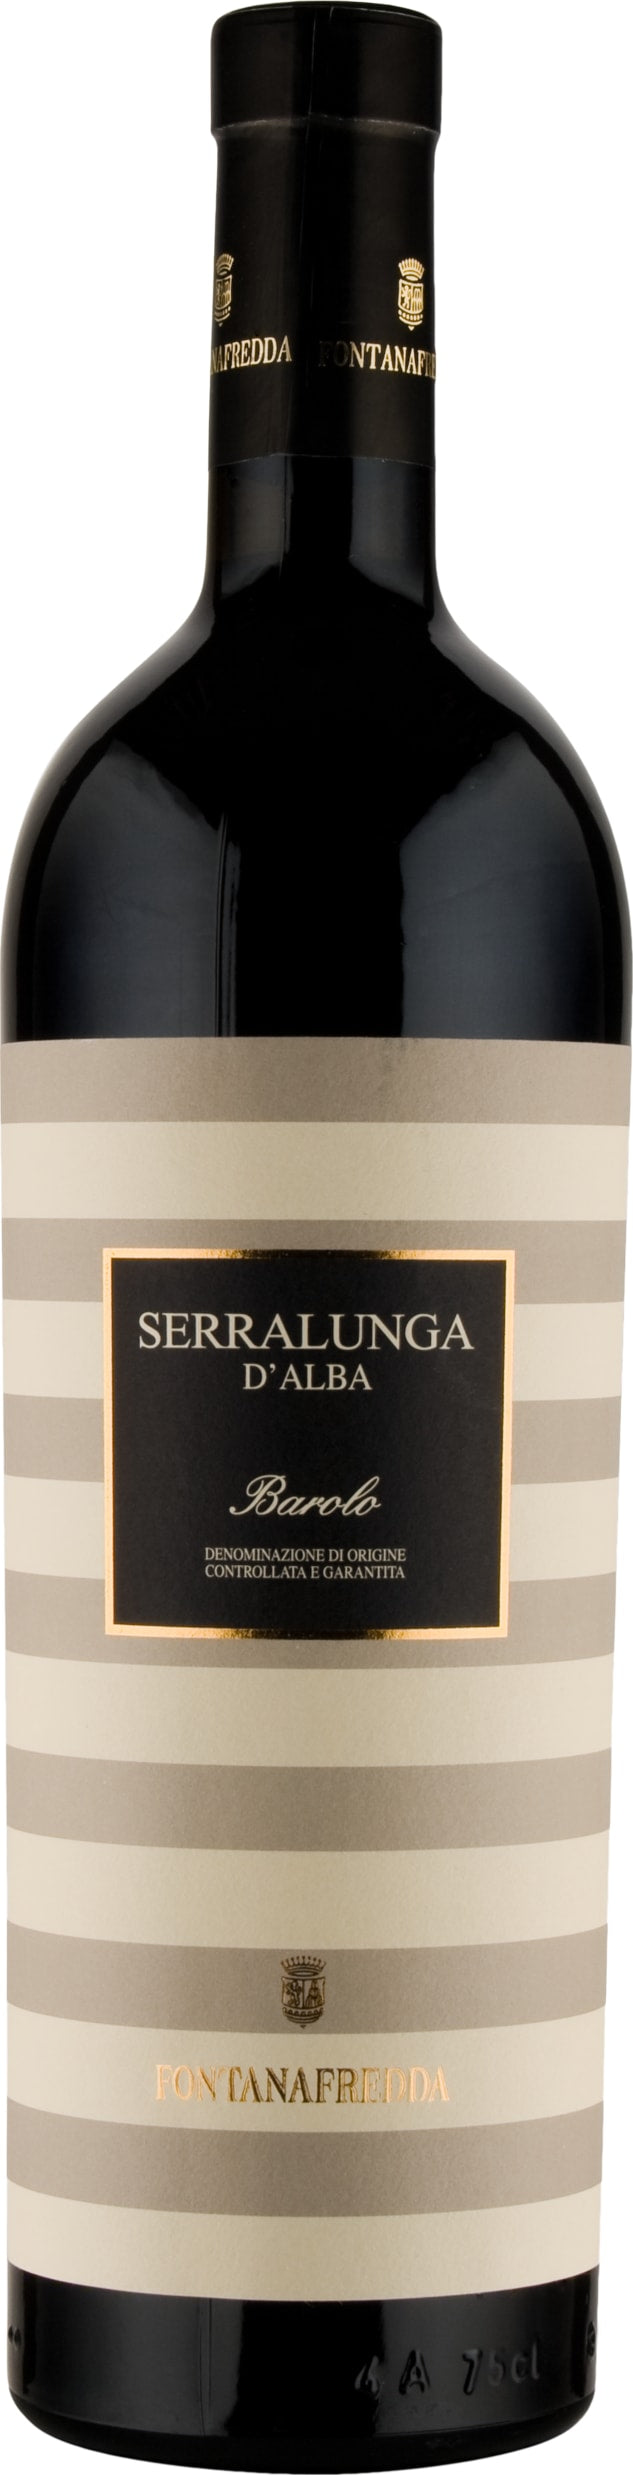 Fontanafredda Barolo di Serralunga d'Alba DOCG 2019 75cl - Buy Fontanafredda Wines from GREAT WINES DIRECT wine shop